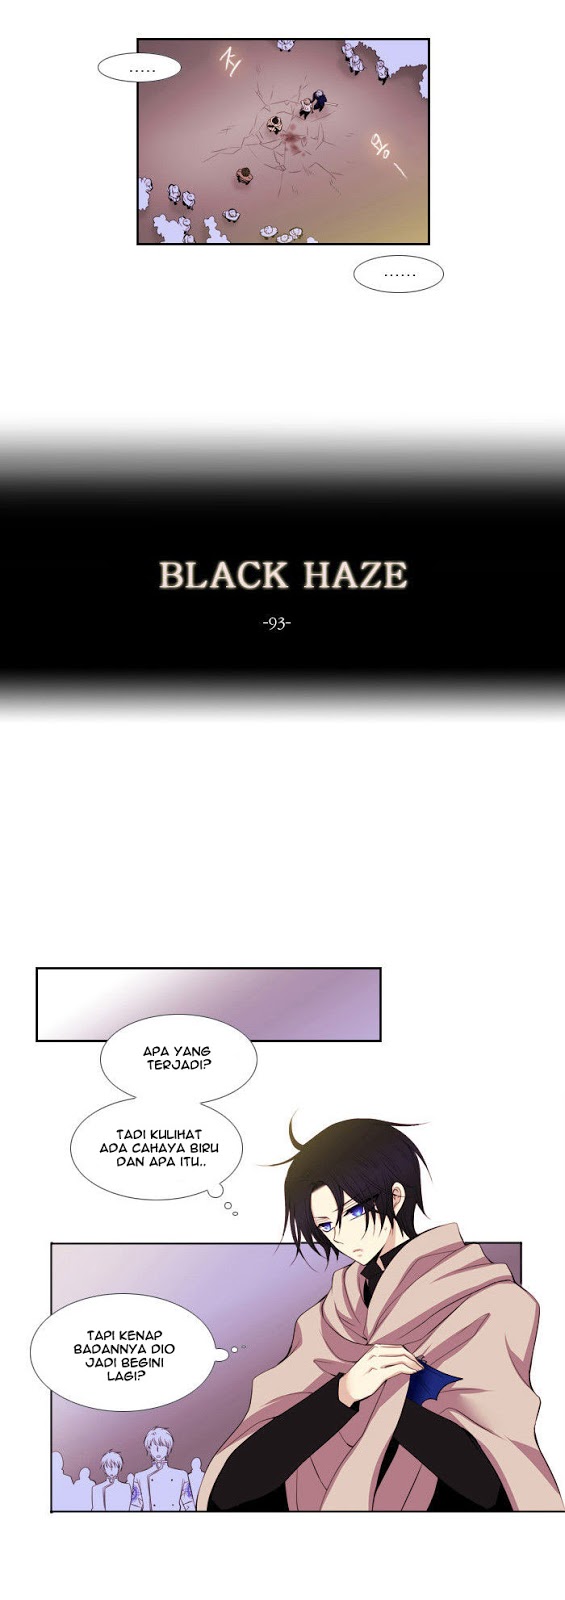 Black Haze: Chapter 93 - Page 1